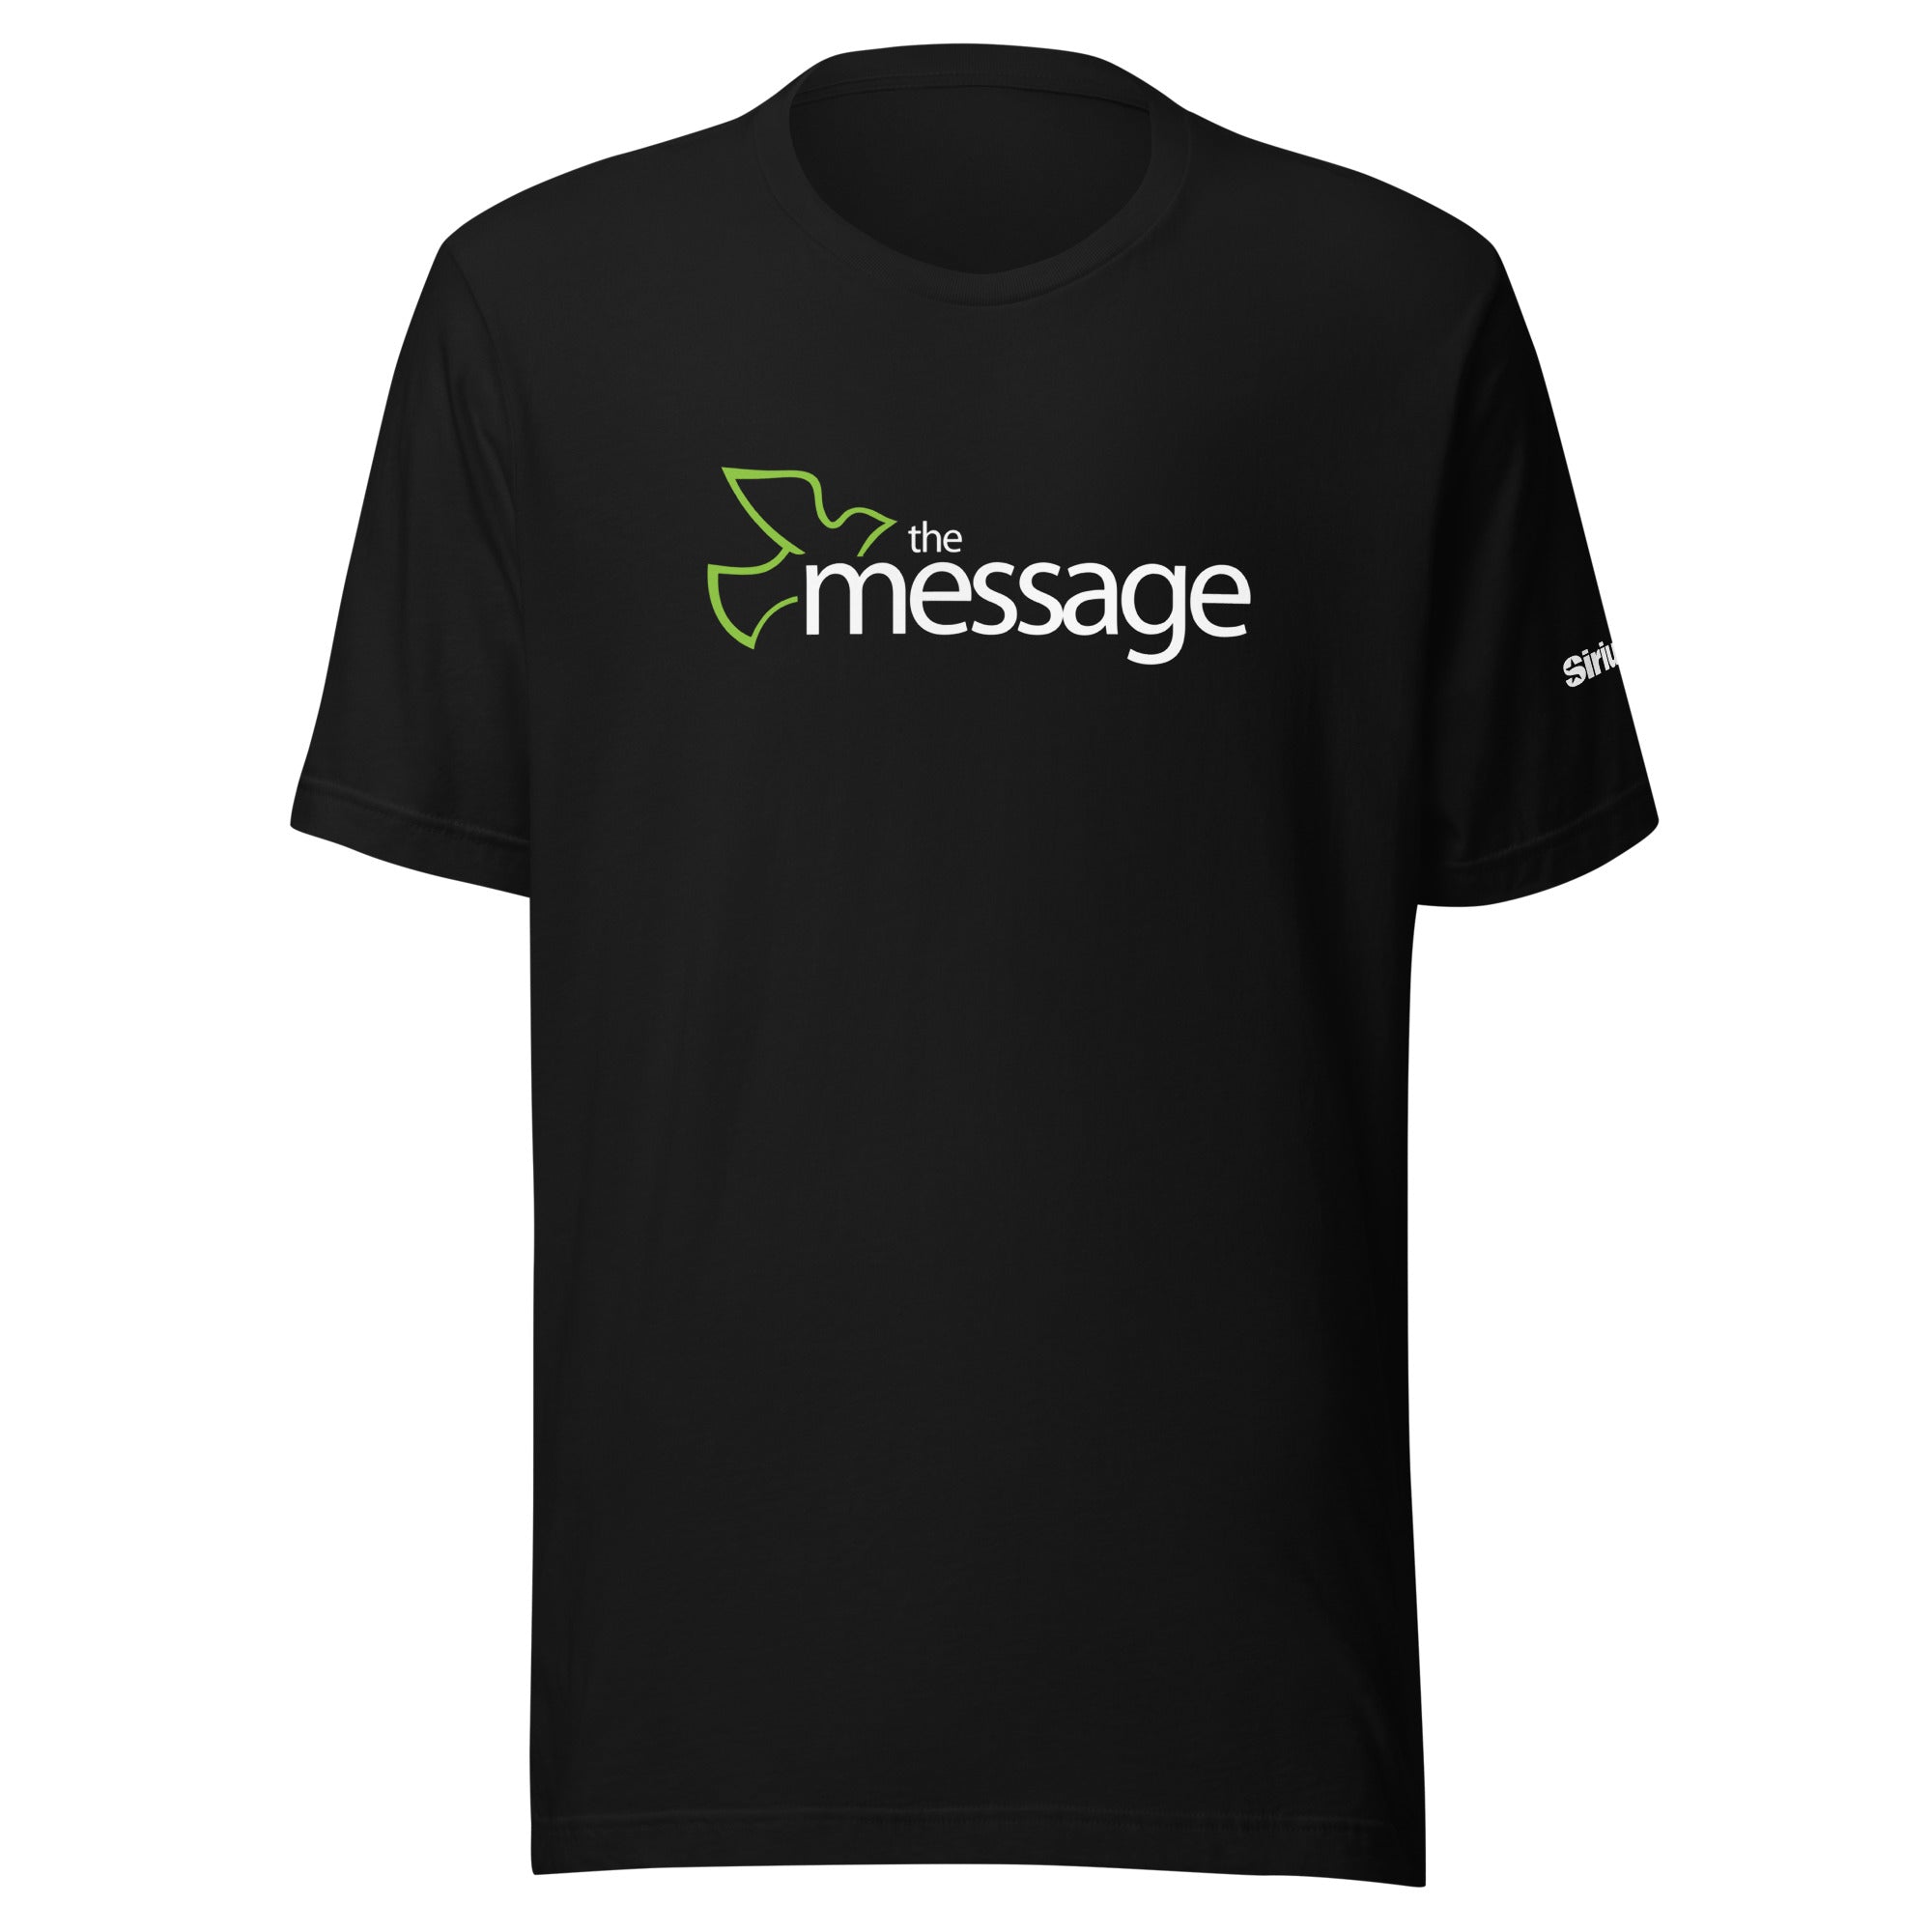 The Message: T-shirt (Black)